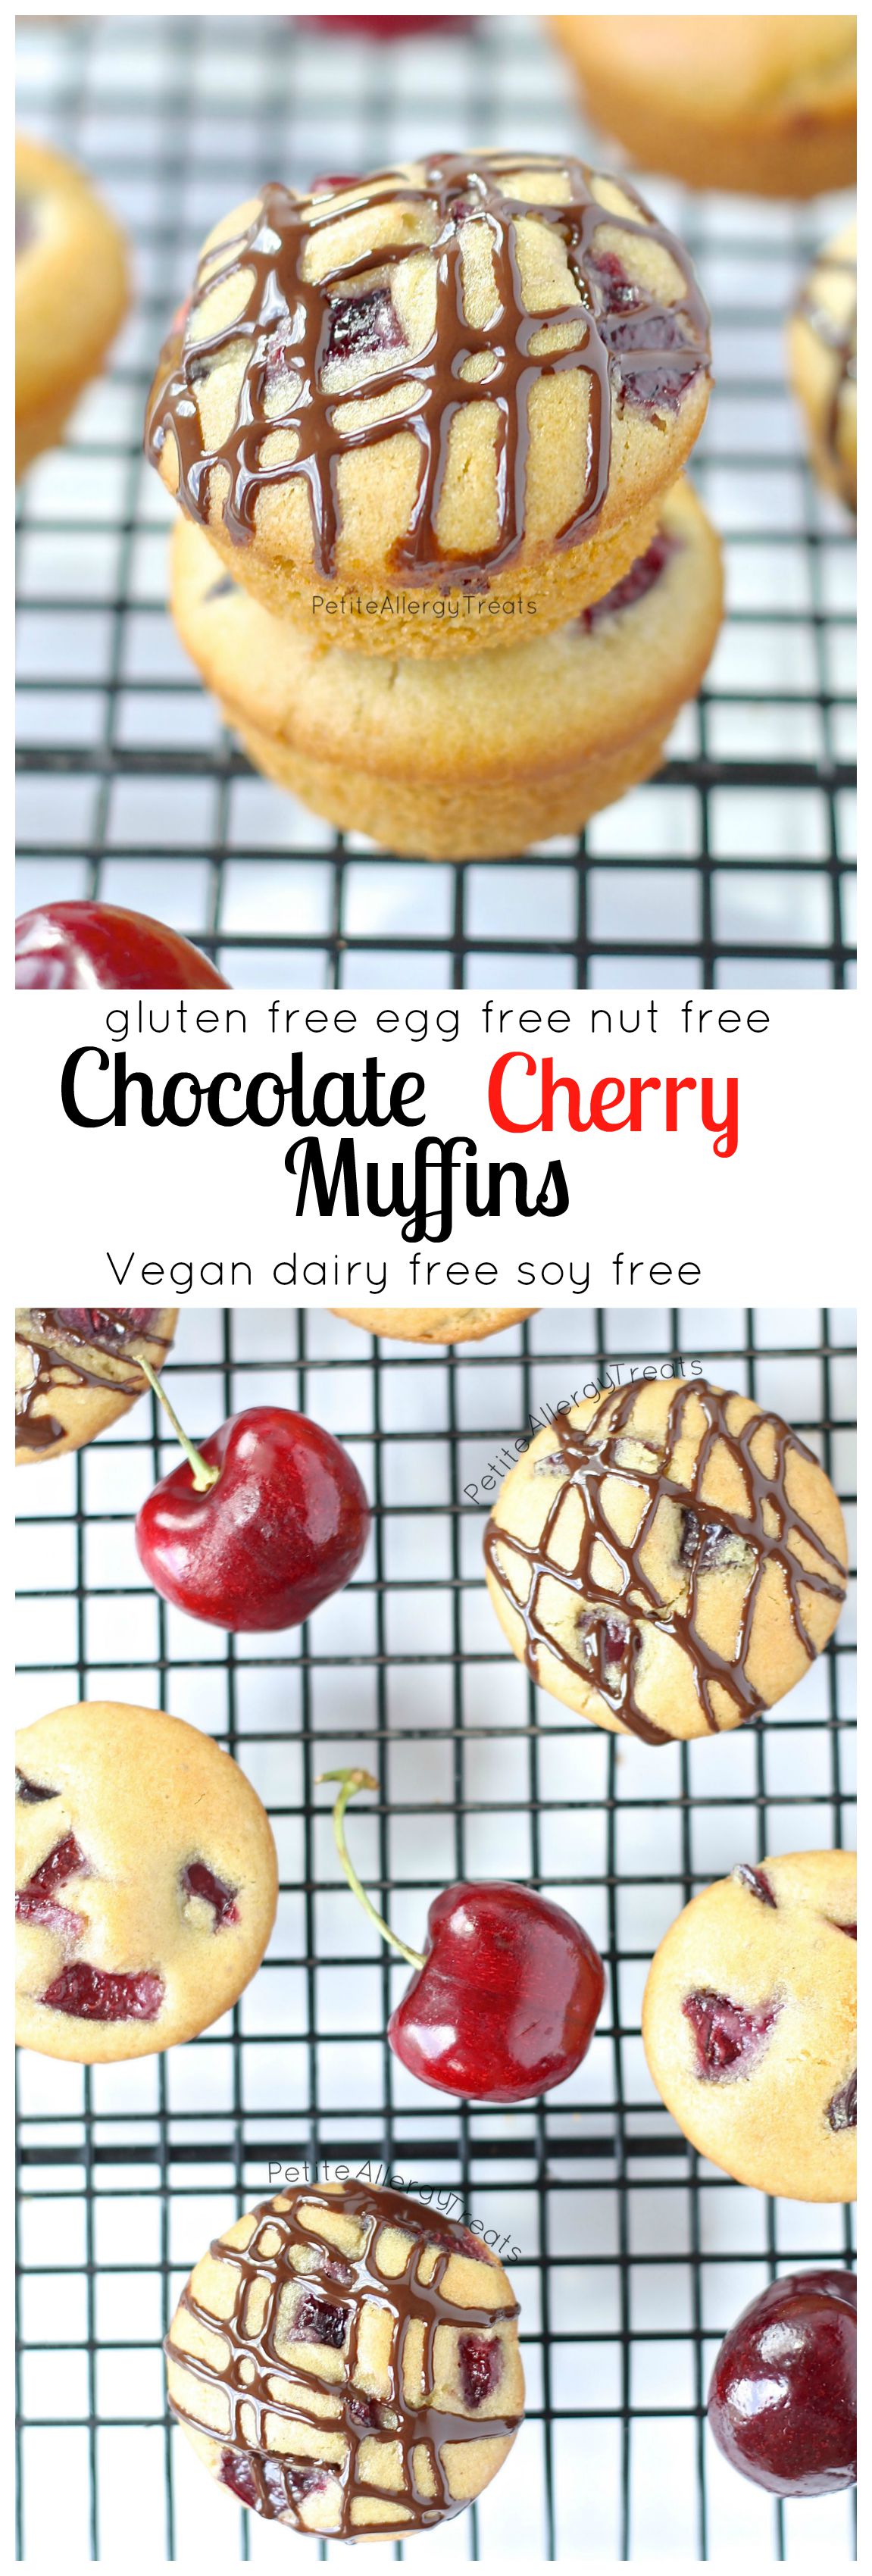 Chocolate Cherry Muffins (gluten free Vegan) Sweet cherries with whole grain gluten free flour makes these muffins irresistible! #tothefullest